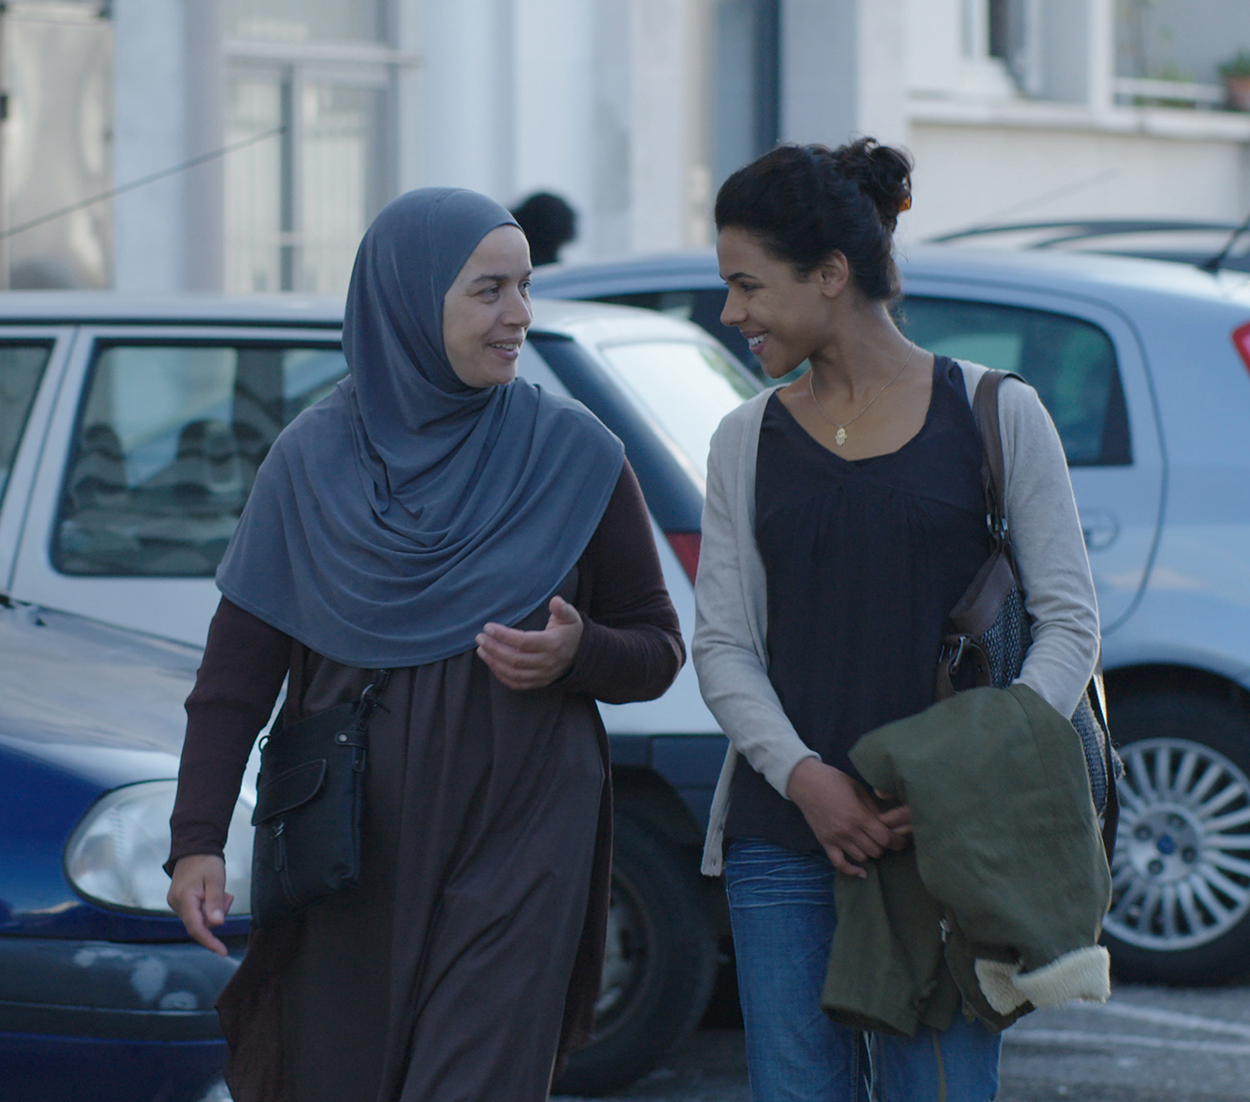 Fatima et Nesrine marchent dans la rue.